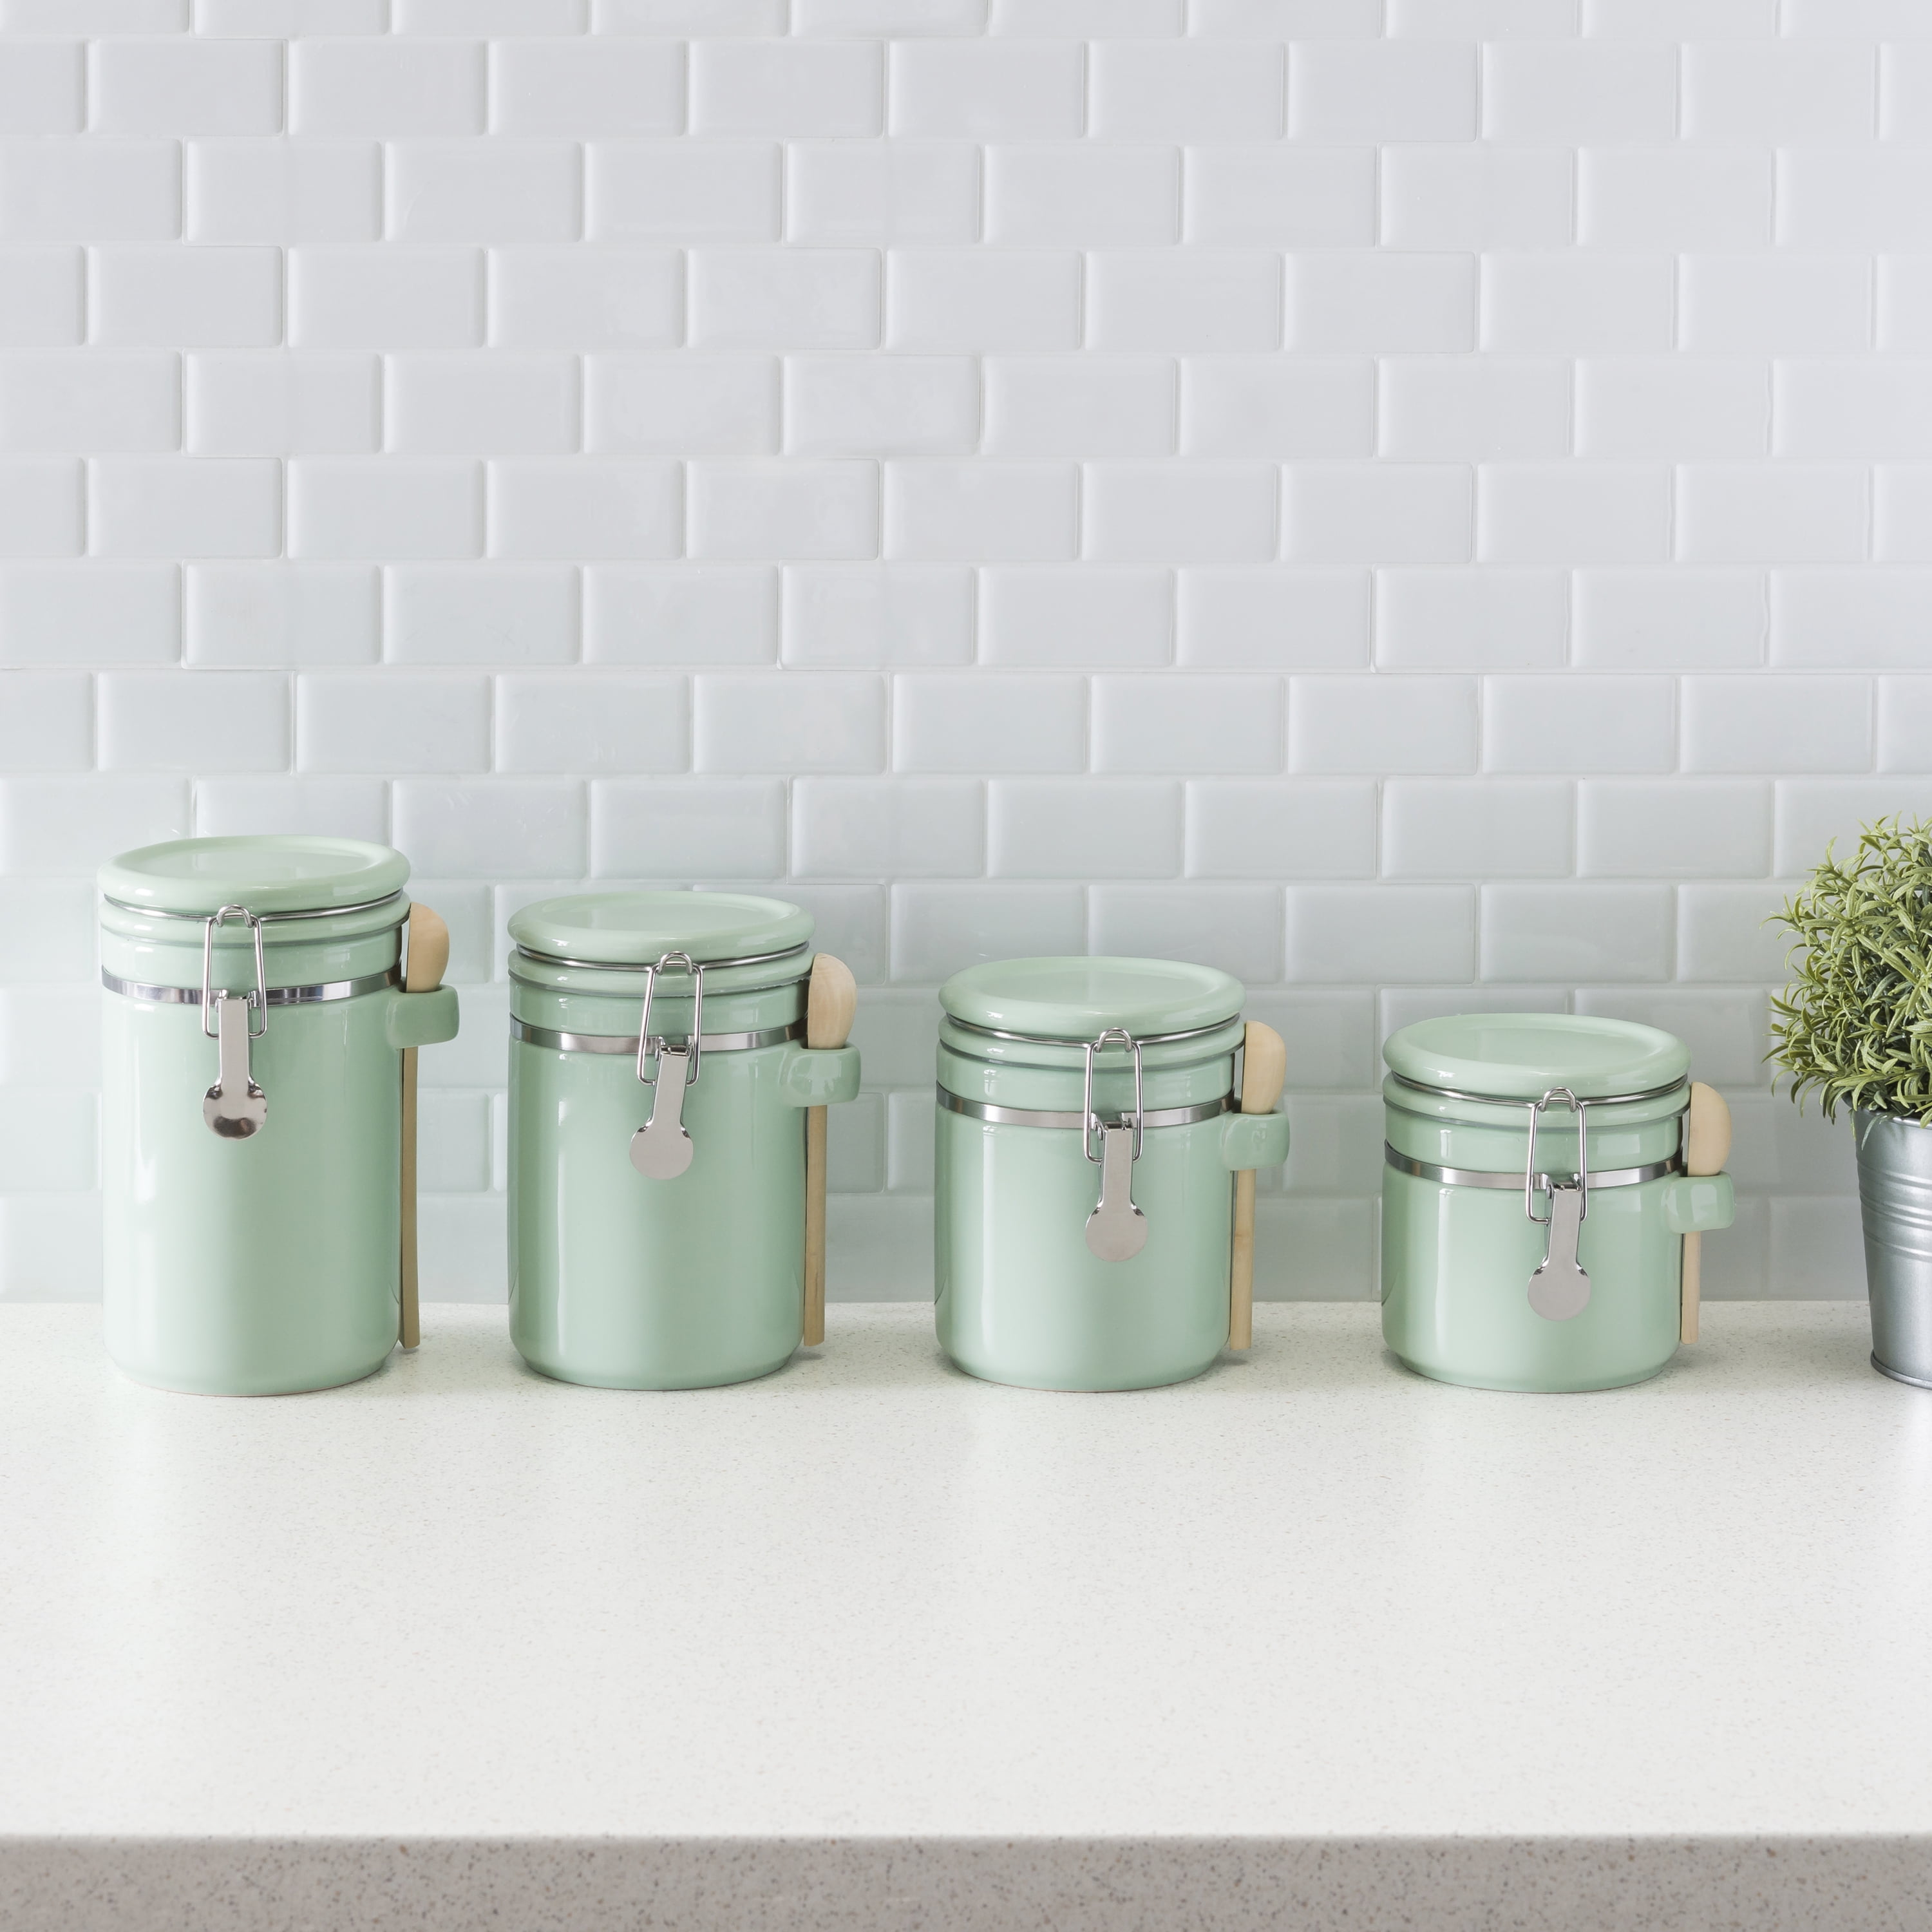 Details about   Vintage Ceramic Fruit Cookie Jar Canister Kitchen Storage Container Cabinet Decr 